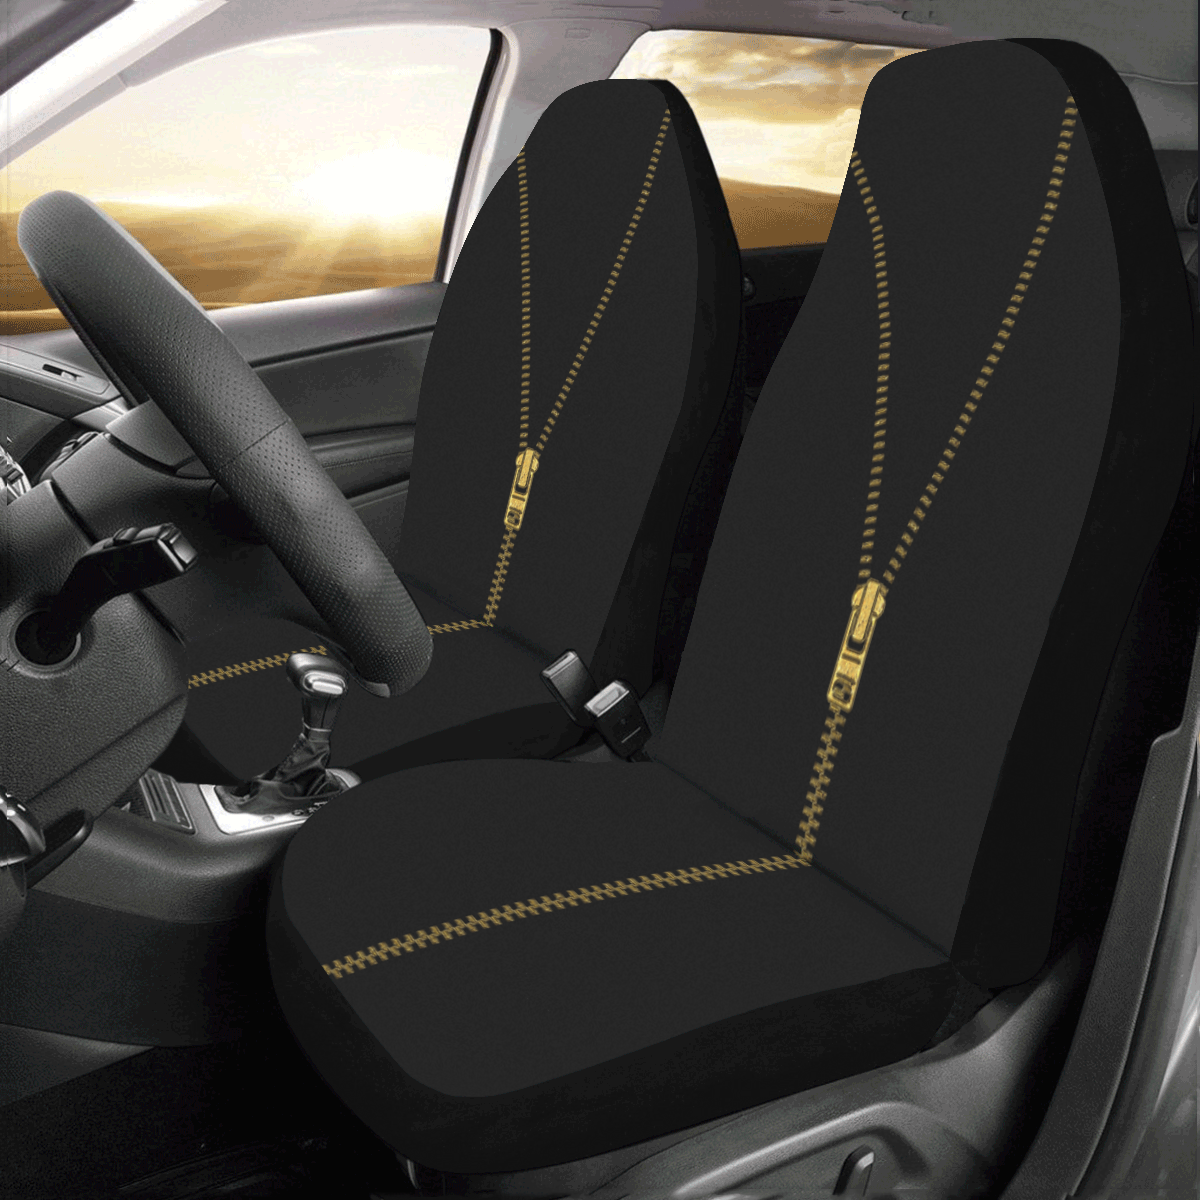 ZIPPER metal gold Car Seat Covers (Set of 2)